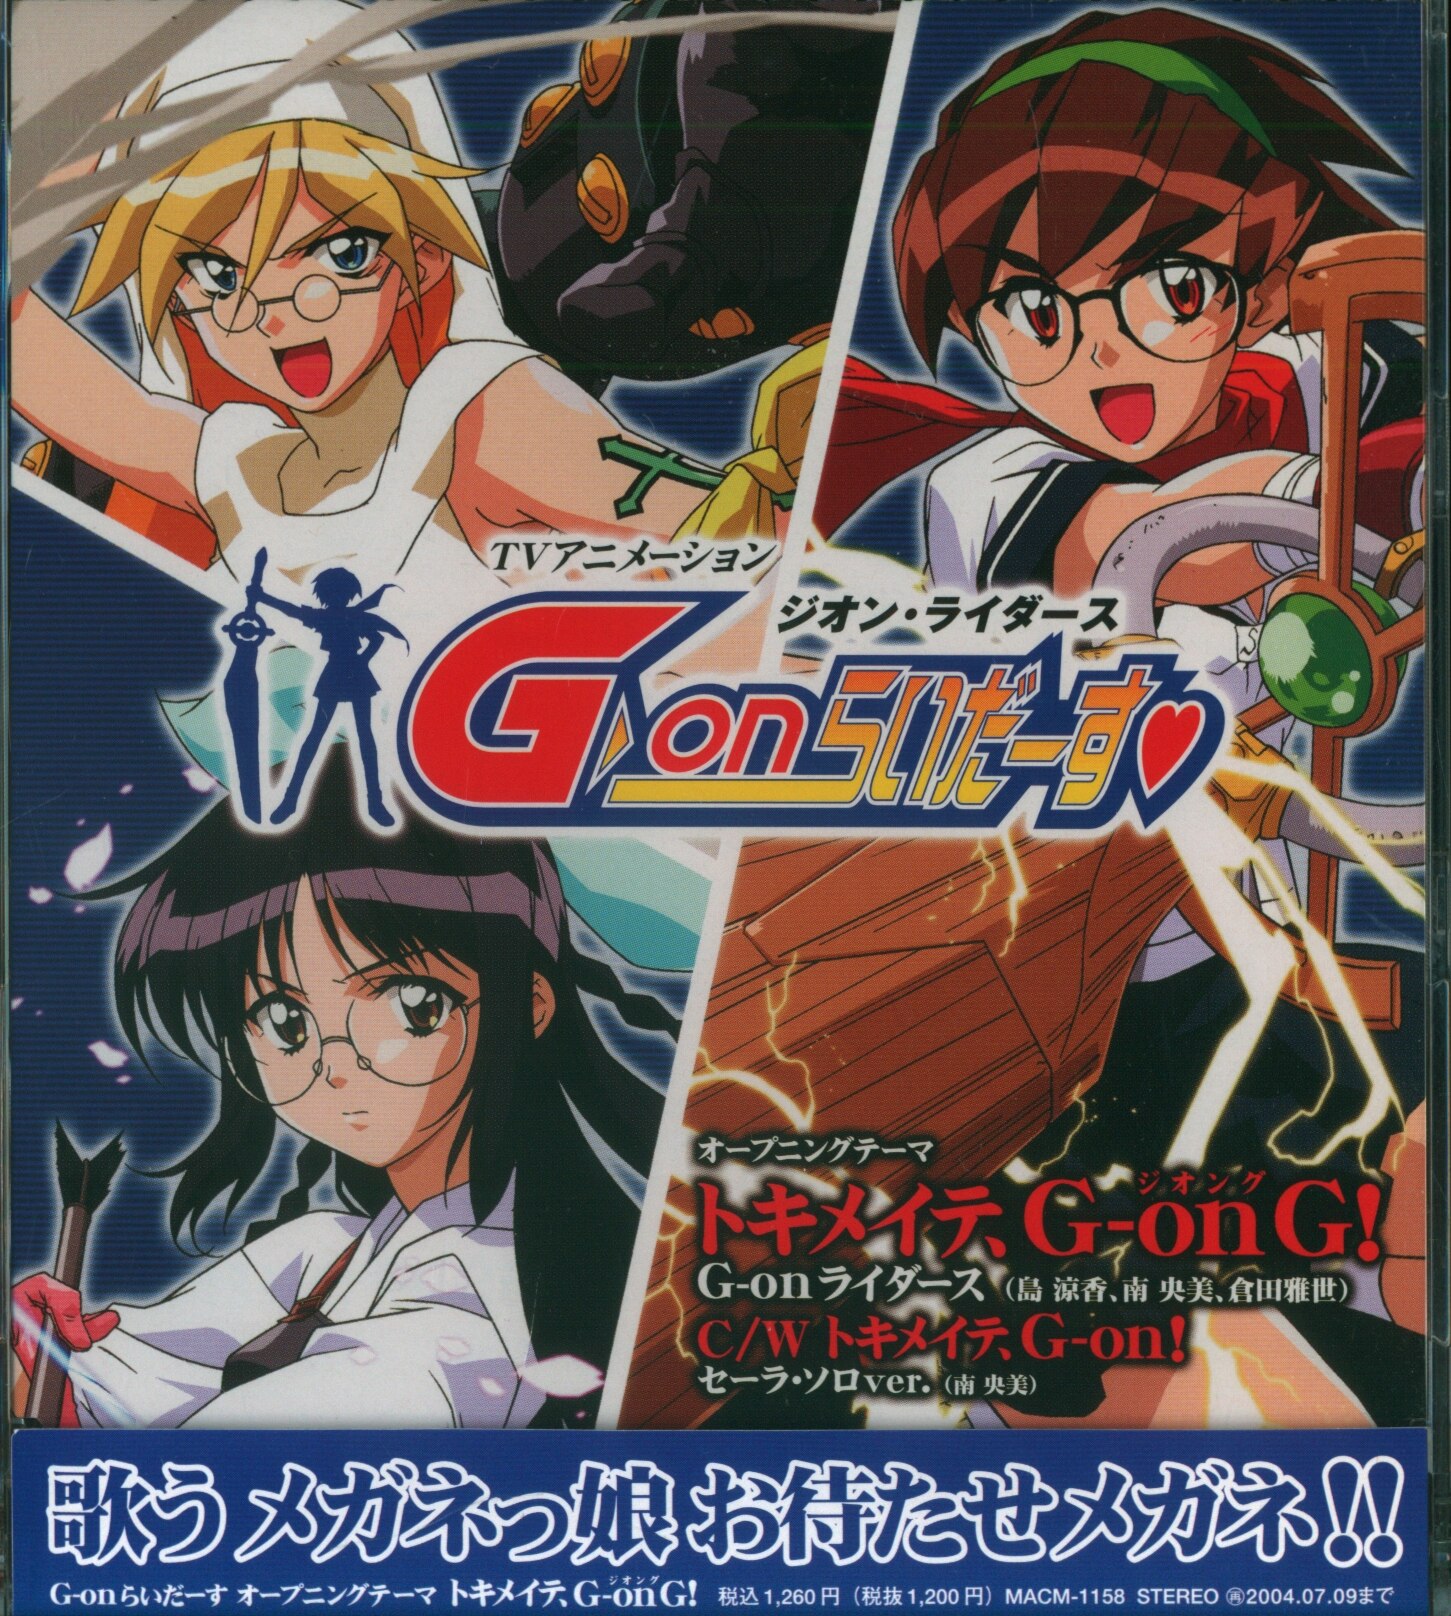 Anime CD Tokimeite G-onG! / G-on Riders anime 